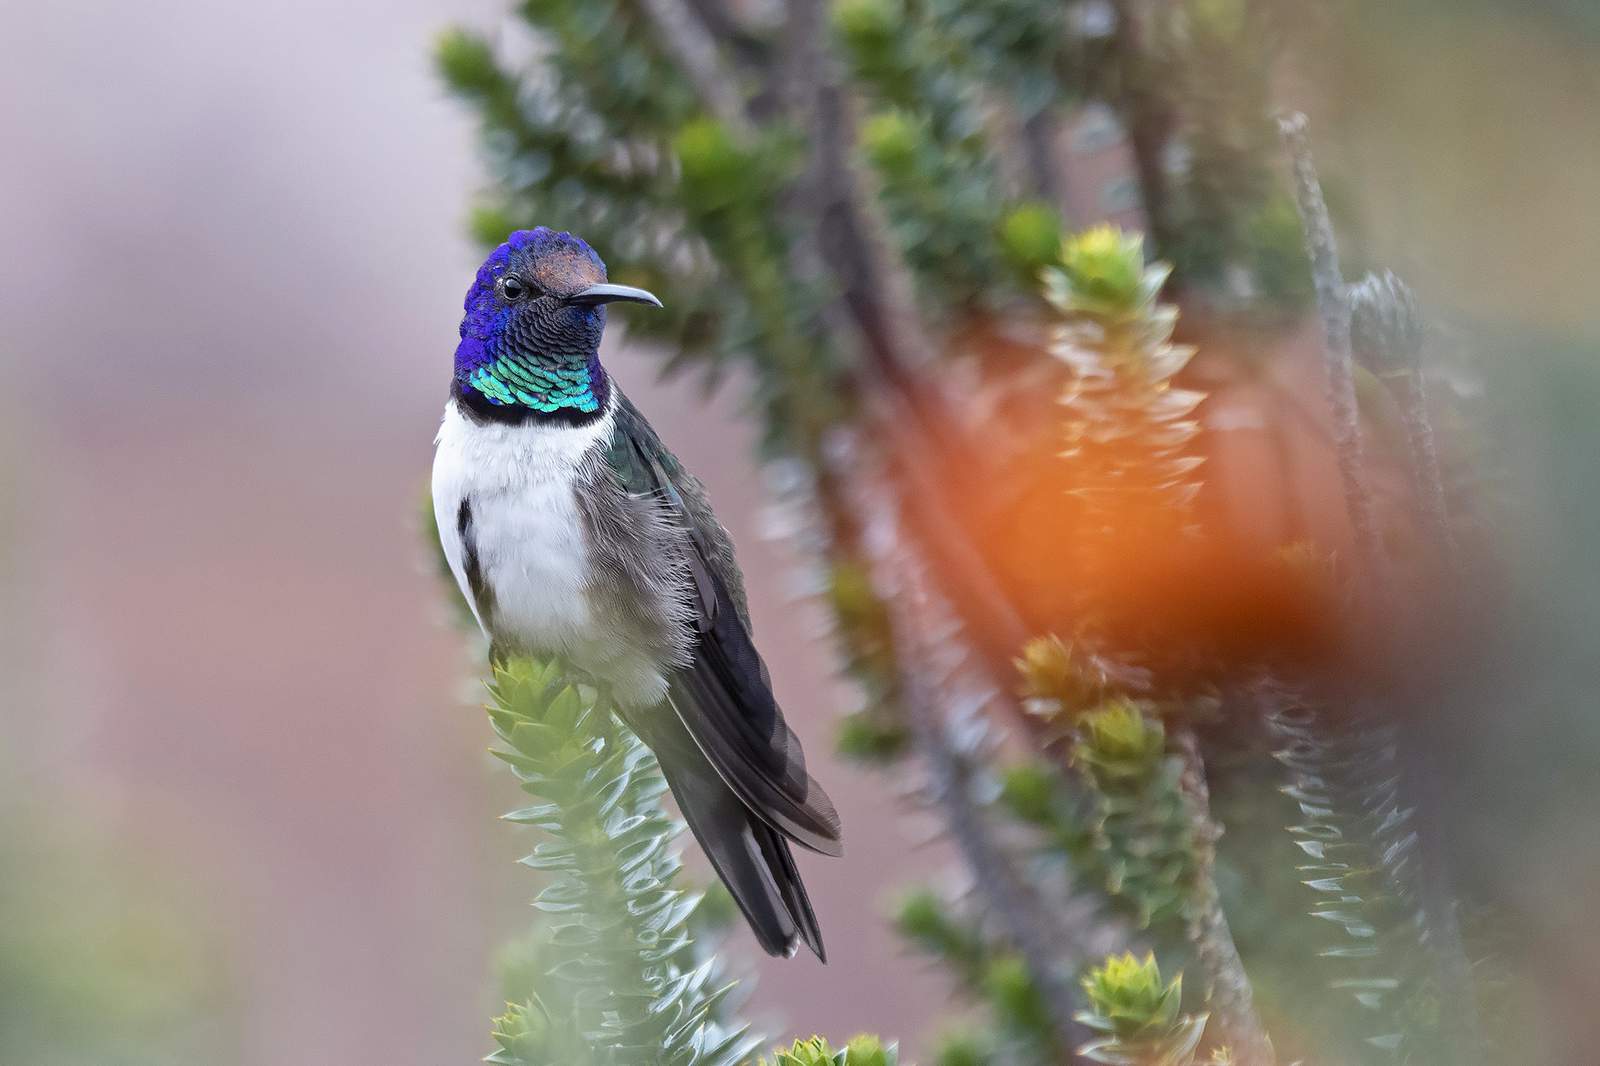 Ecuadorian hummingbirds chirp ultrasonic songs of seduction